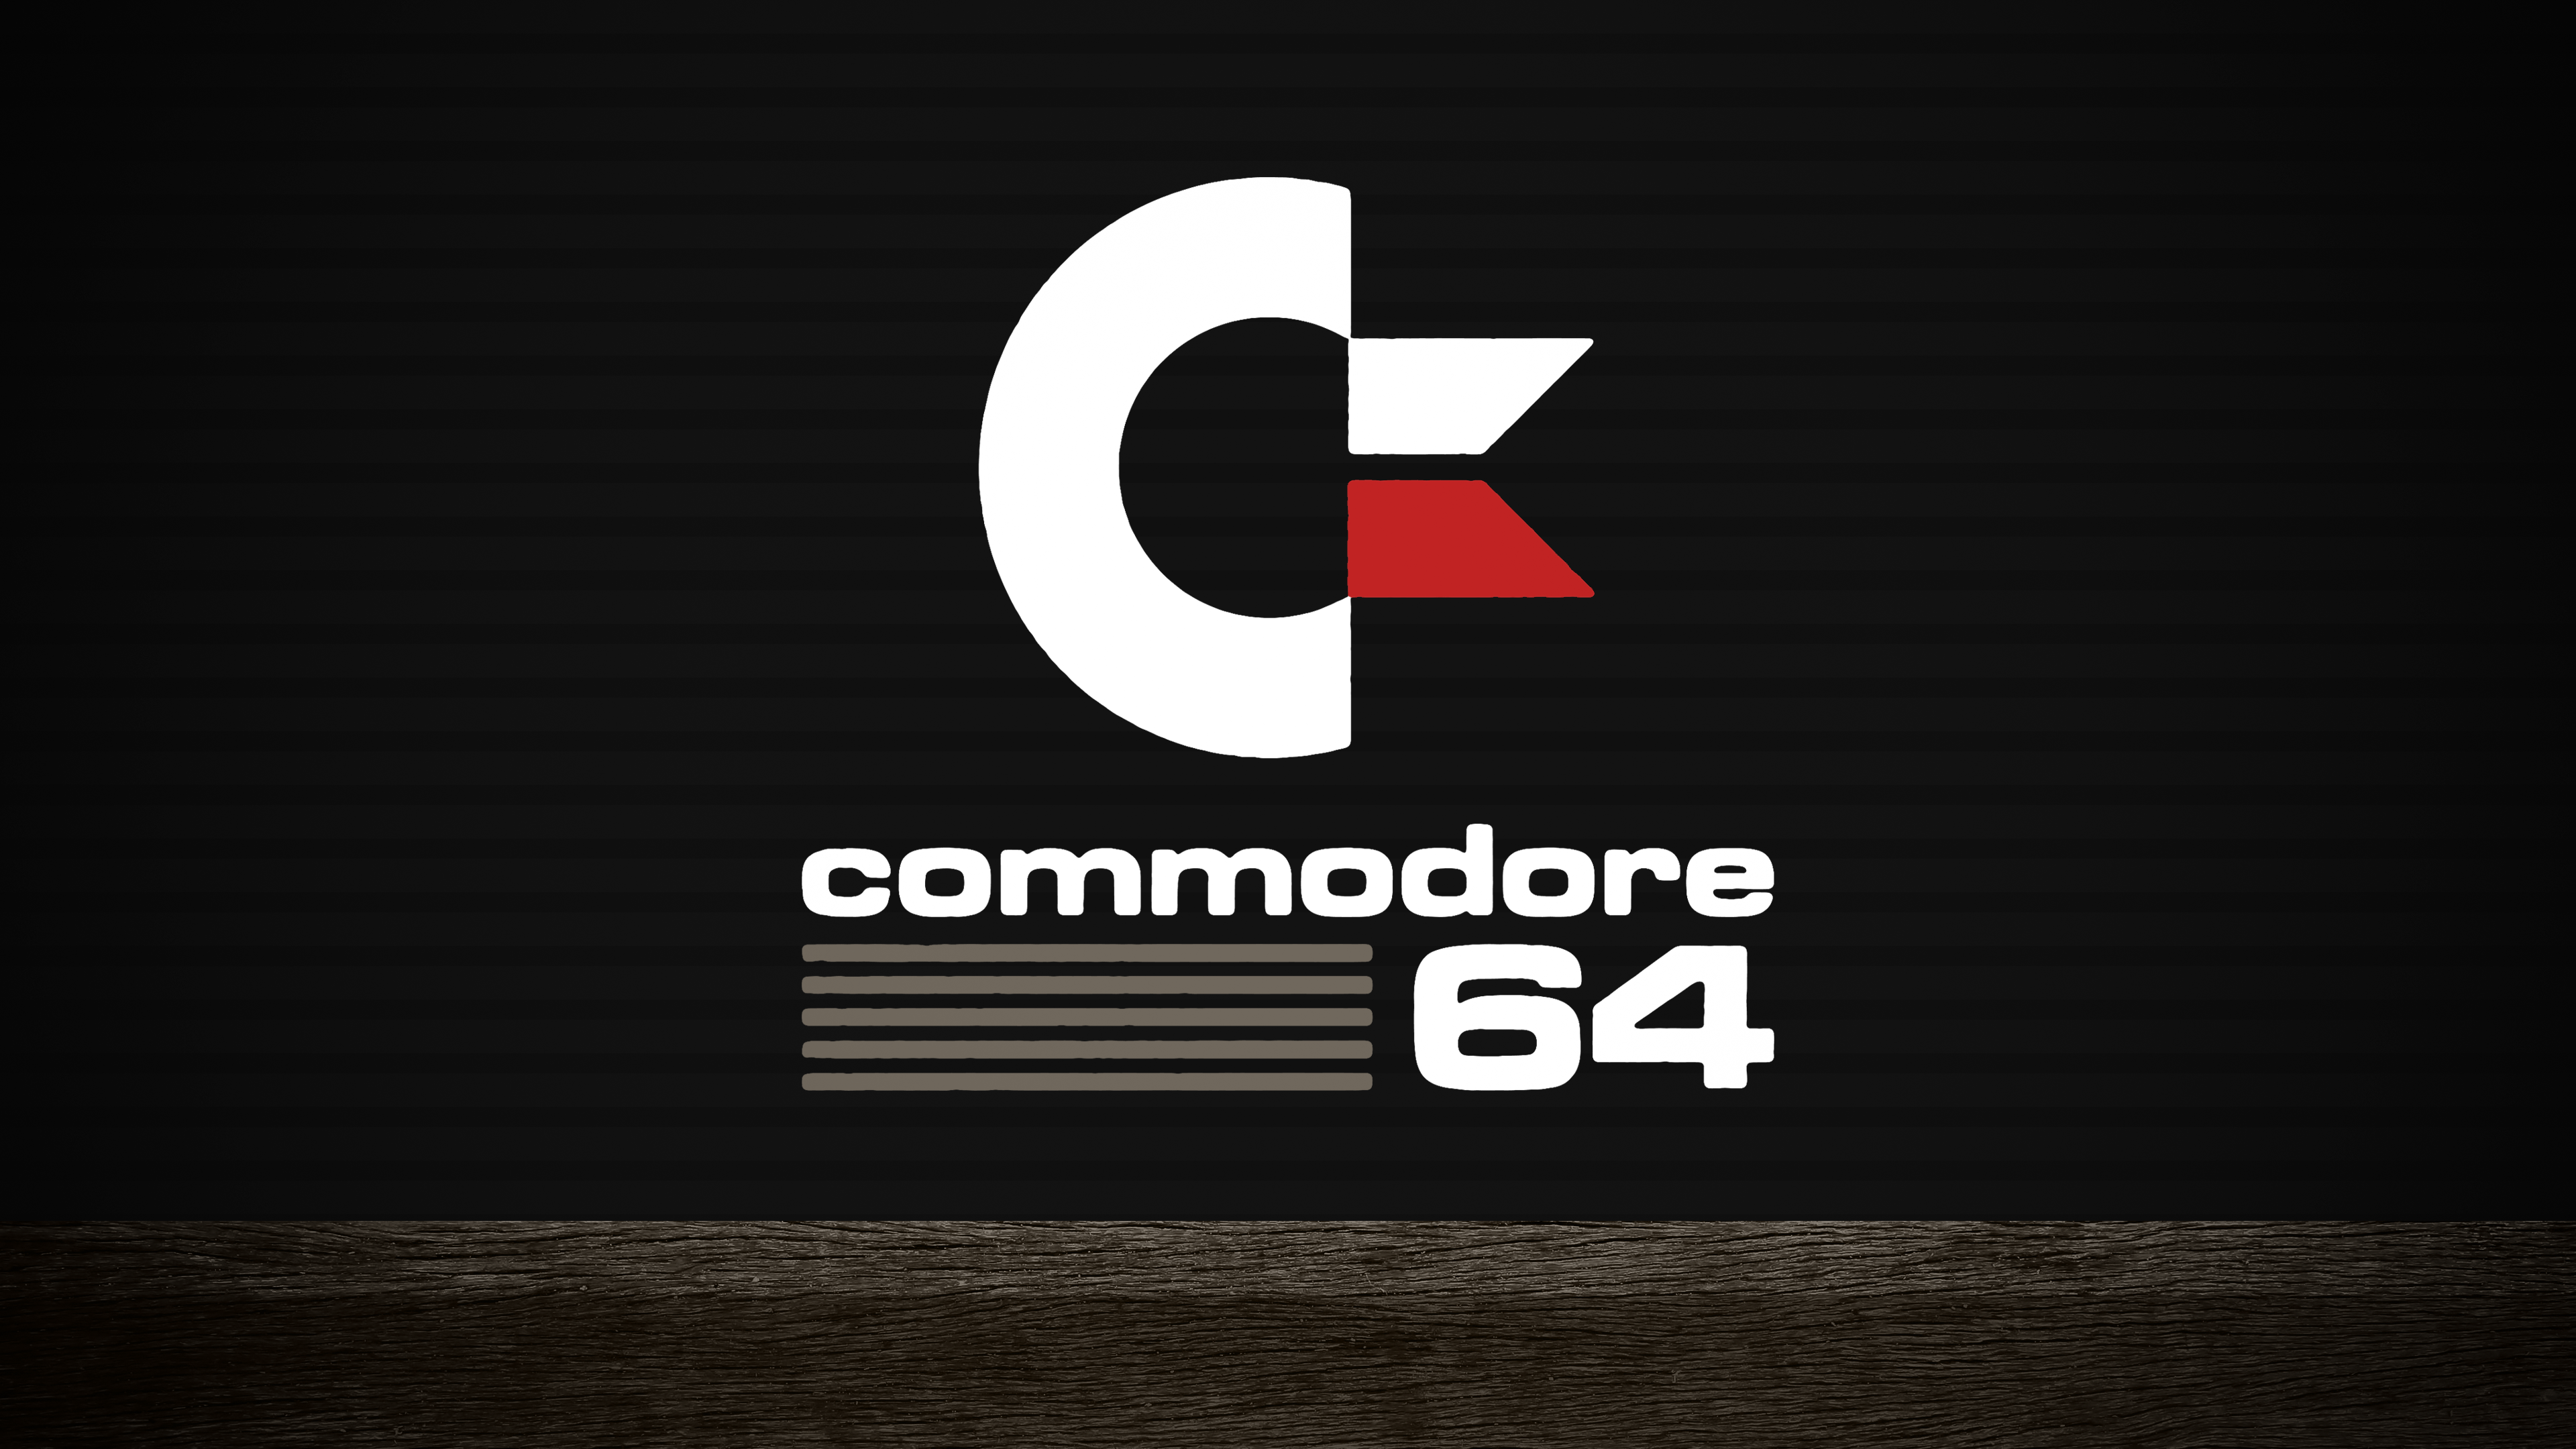 General 3840x2160 Commodore 64 Commodore computer Retro computers logo simple background PC gaming minimalism